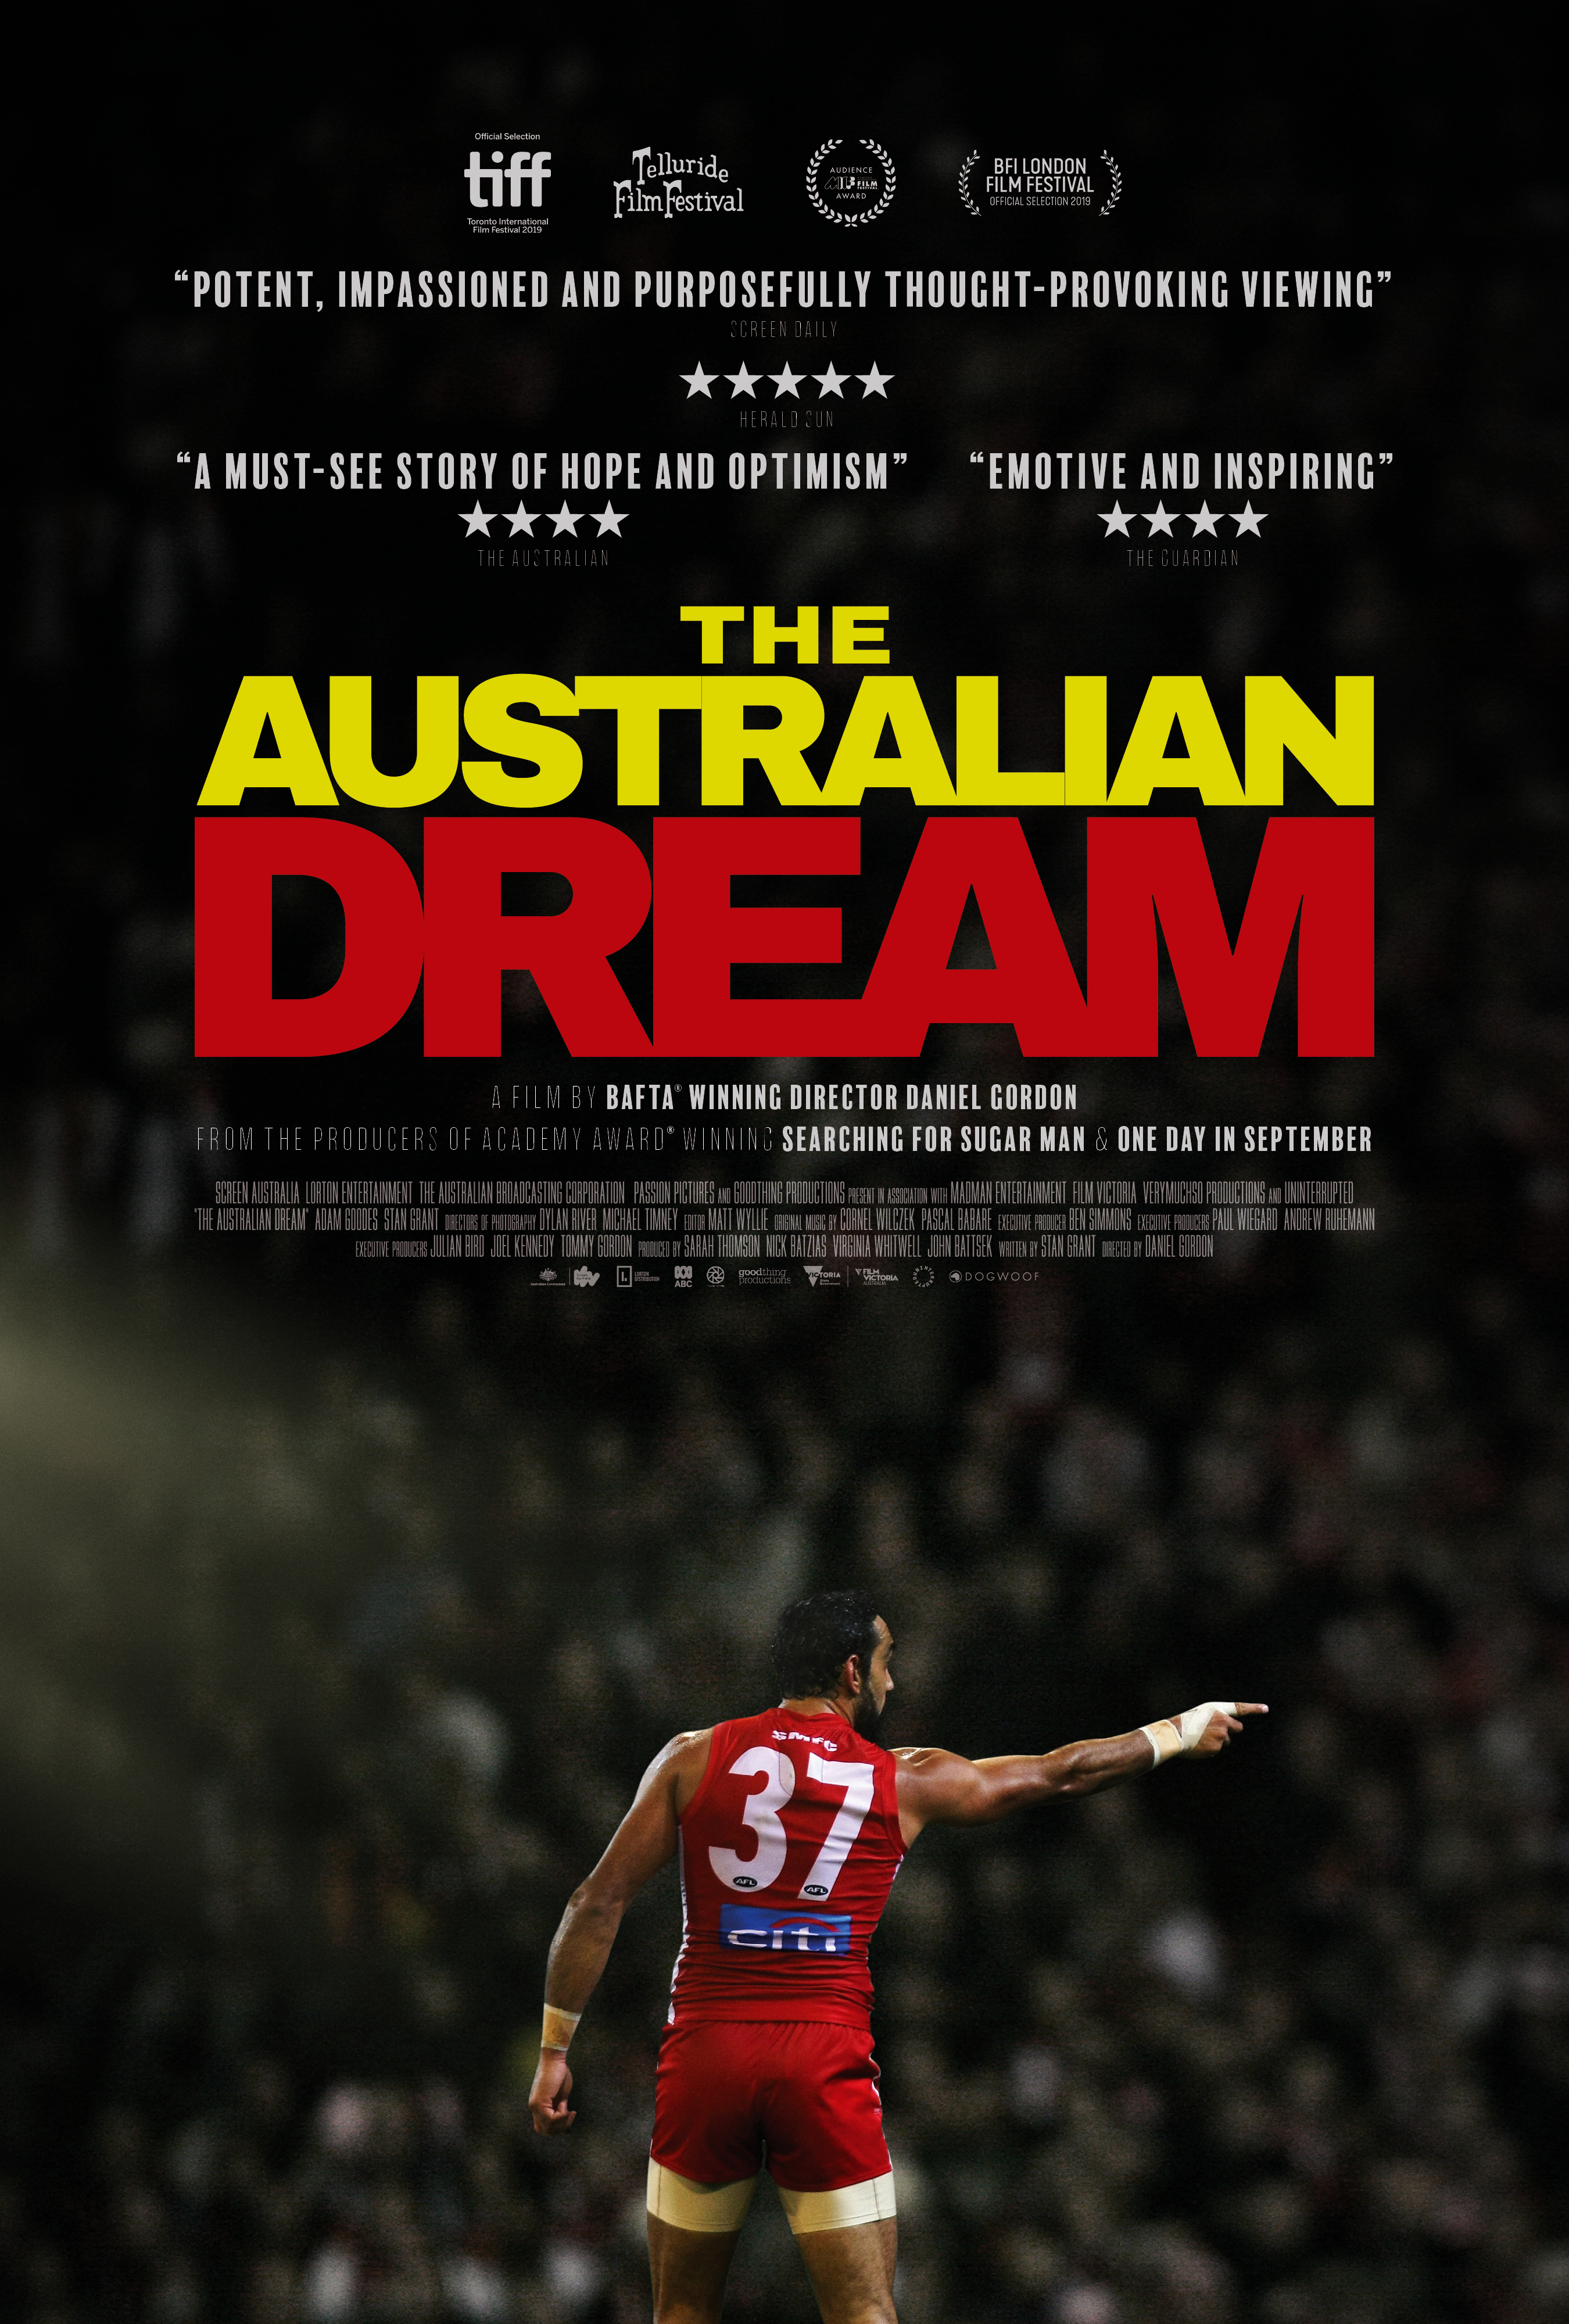 The Australian Dream Image